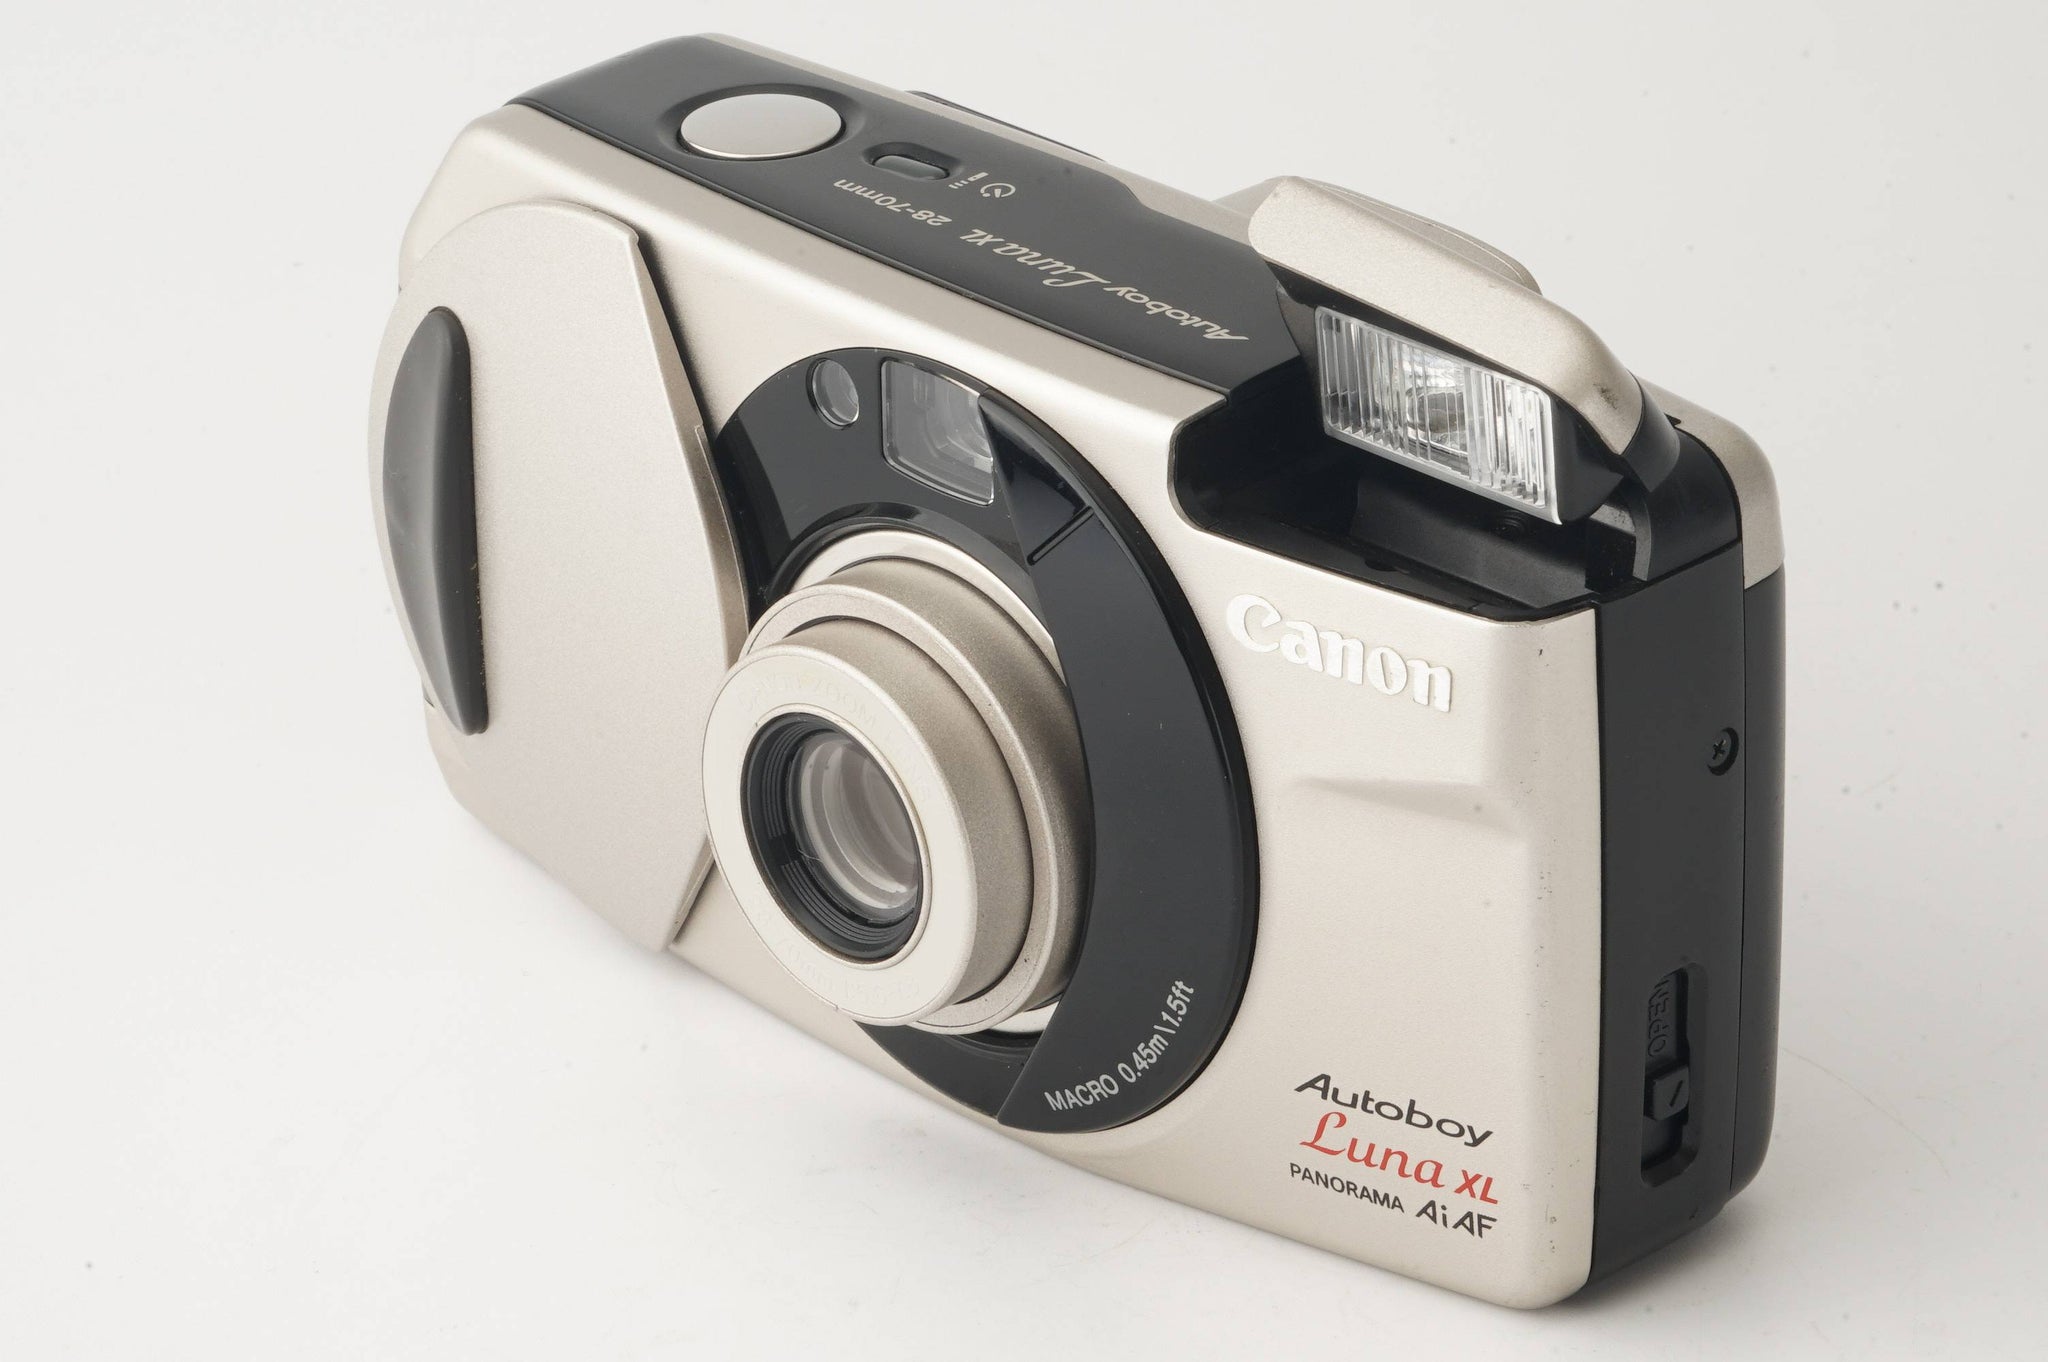 Canon Autoboy Luna XL PANORAMA / ZOOM 28-70mm f/5.6-7.8